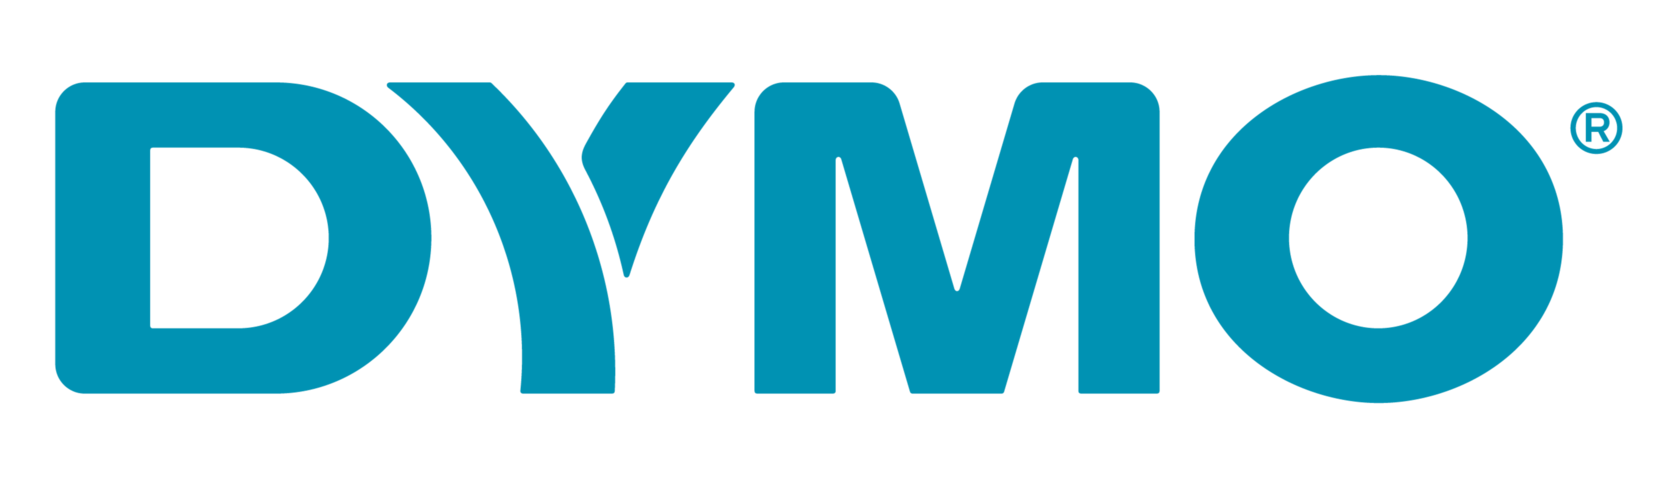 DYMO_Updated_Logo_071516-1 (002)